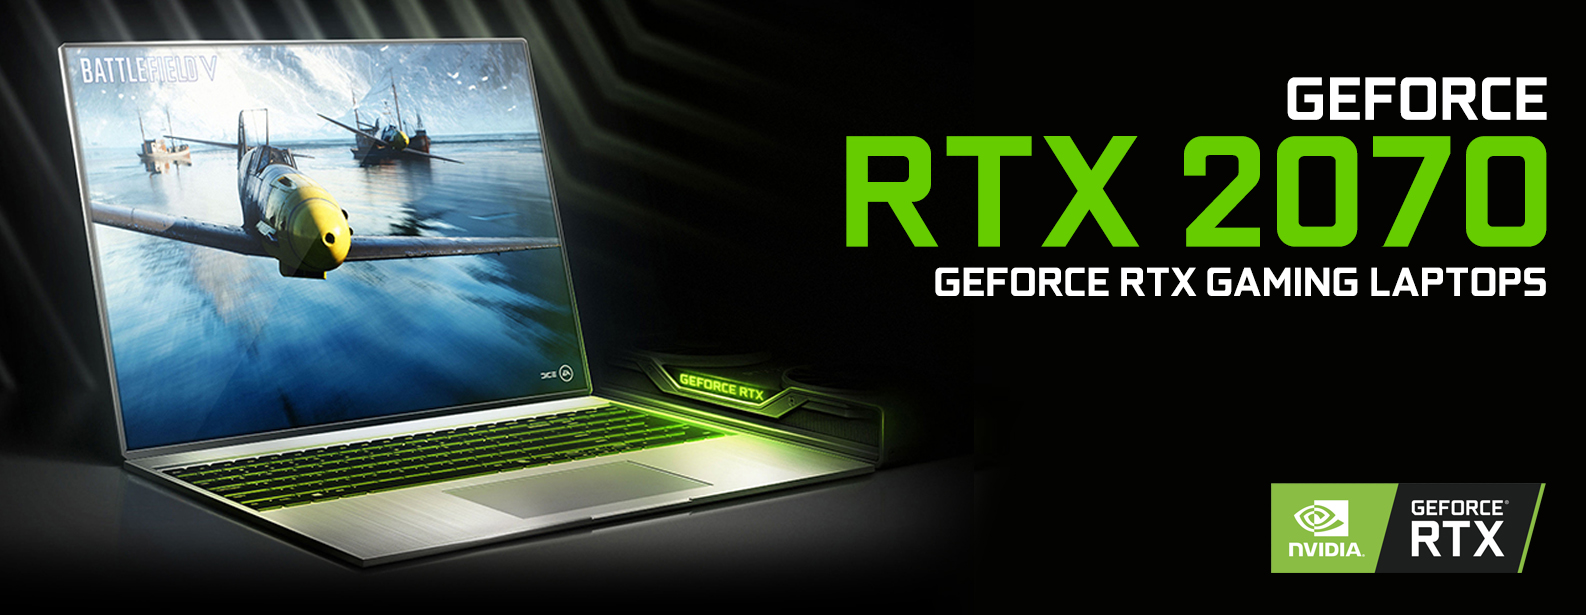 RTX 2070 Laptop Deals South Africa